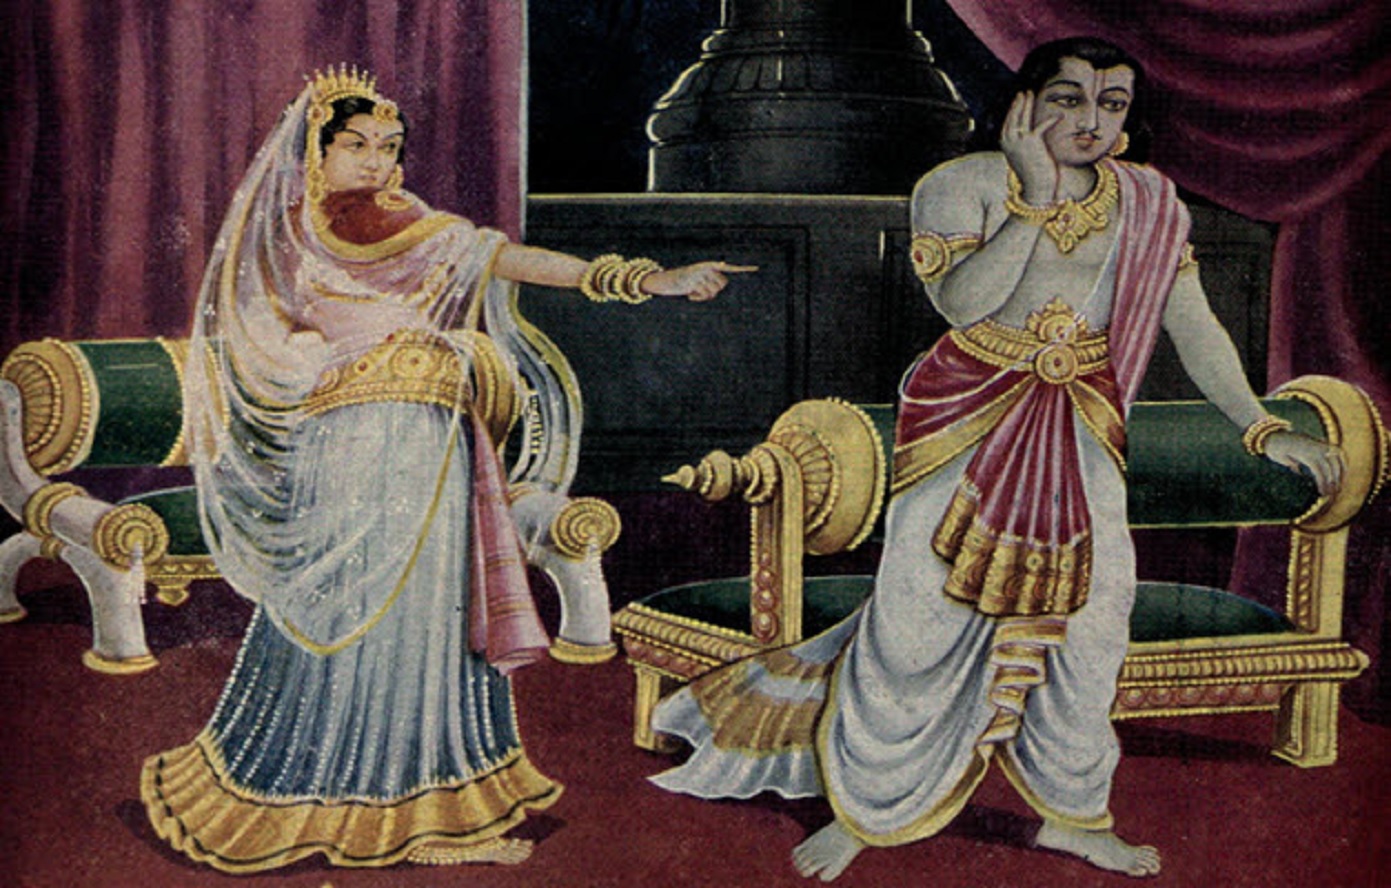 curse of yudhisthira to kunti, raja parikshit death story, king parikshit cursed by shrungi rishi, ashwathama curse, mandavya rishi curse, urvashi apsara, arjun cursed by urvashi, mahabharat curse, महाभारतातील शाप